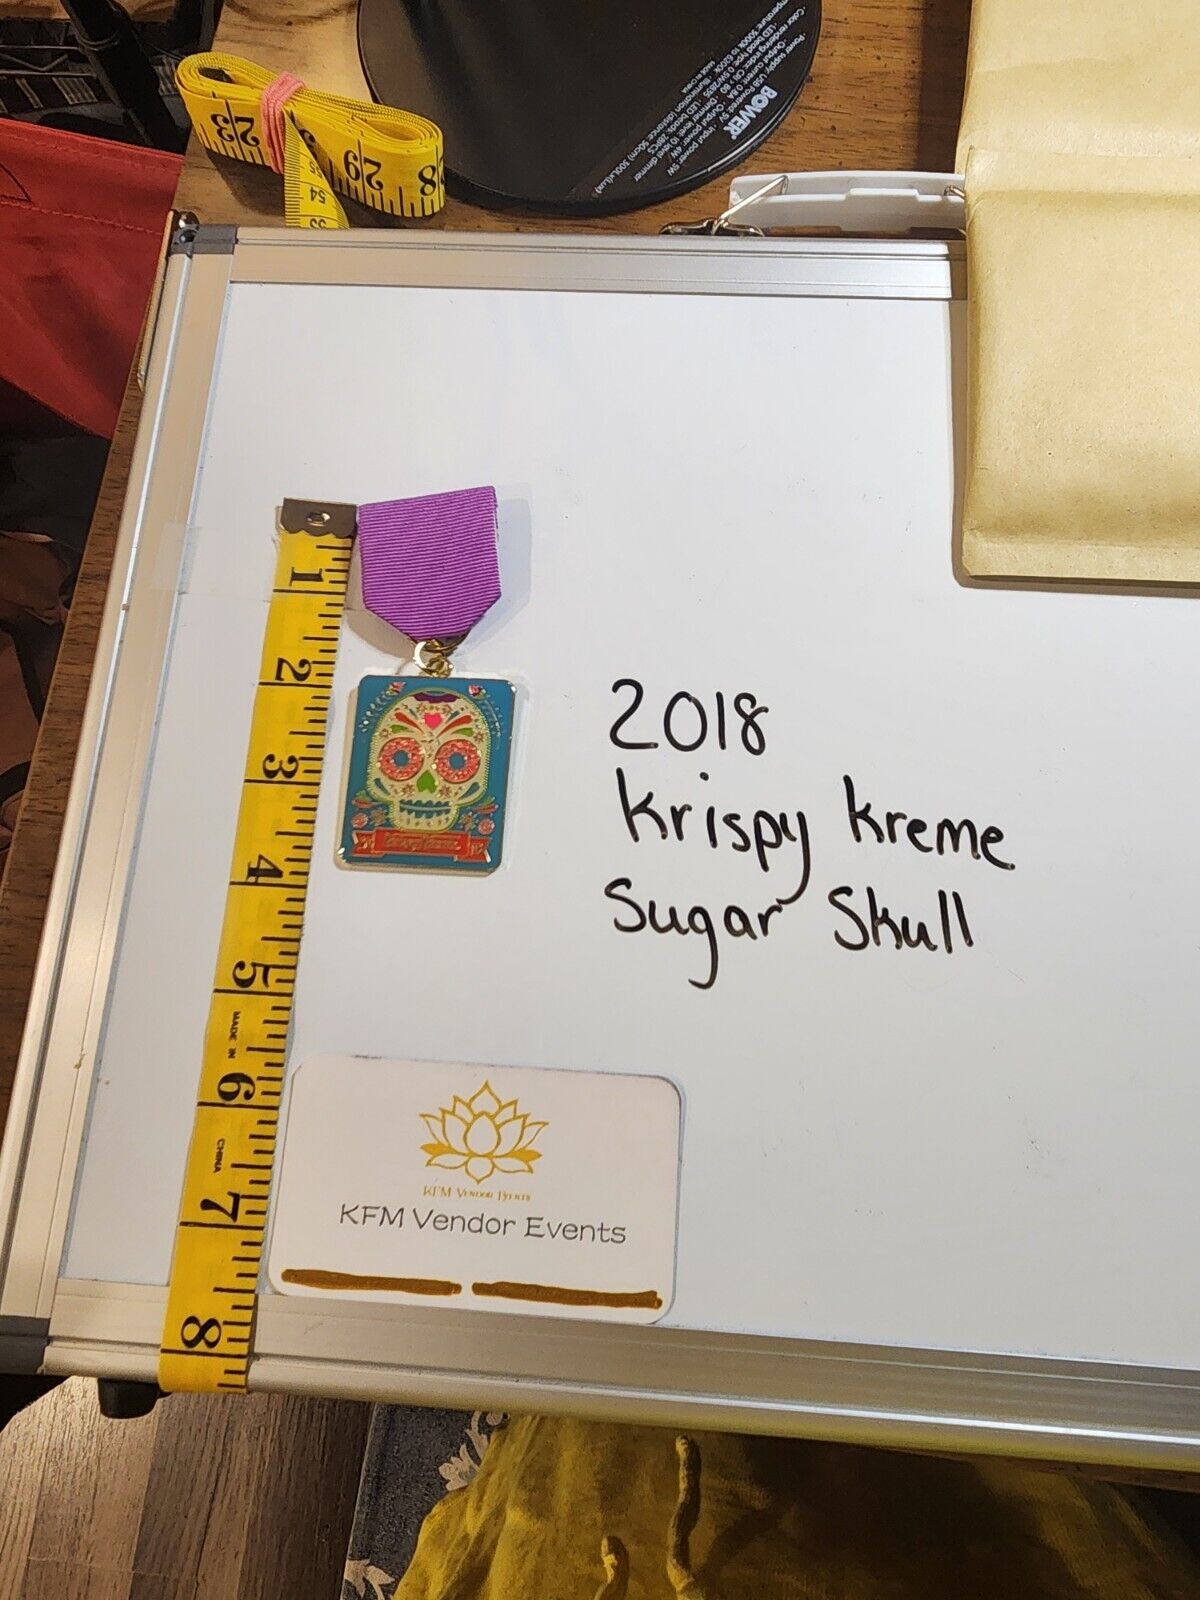 2018 Krispy Kreme Sugar Skull Fiesta Medal